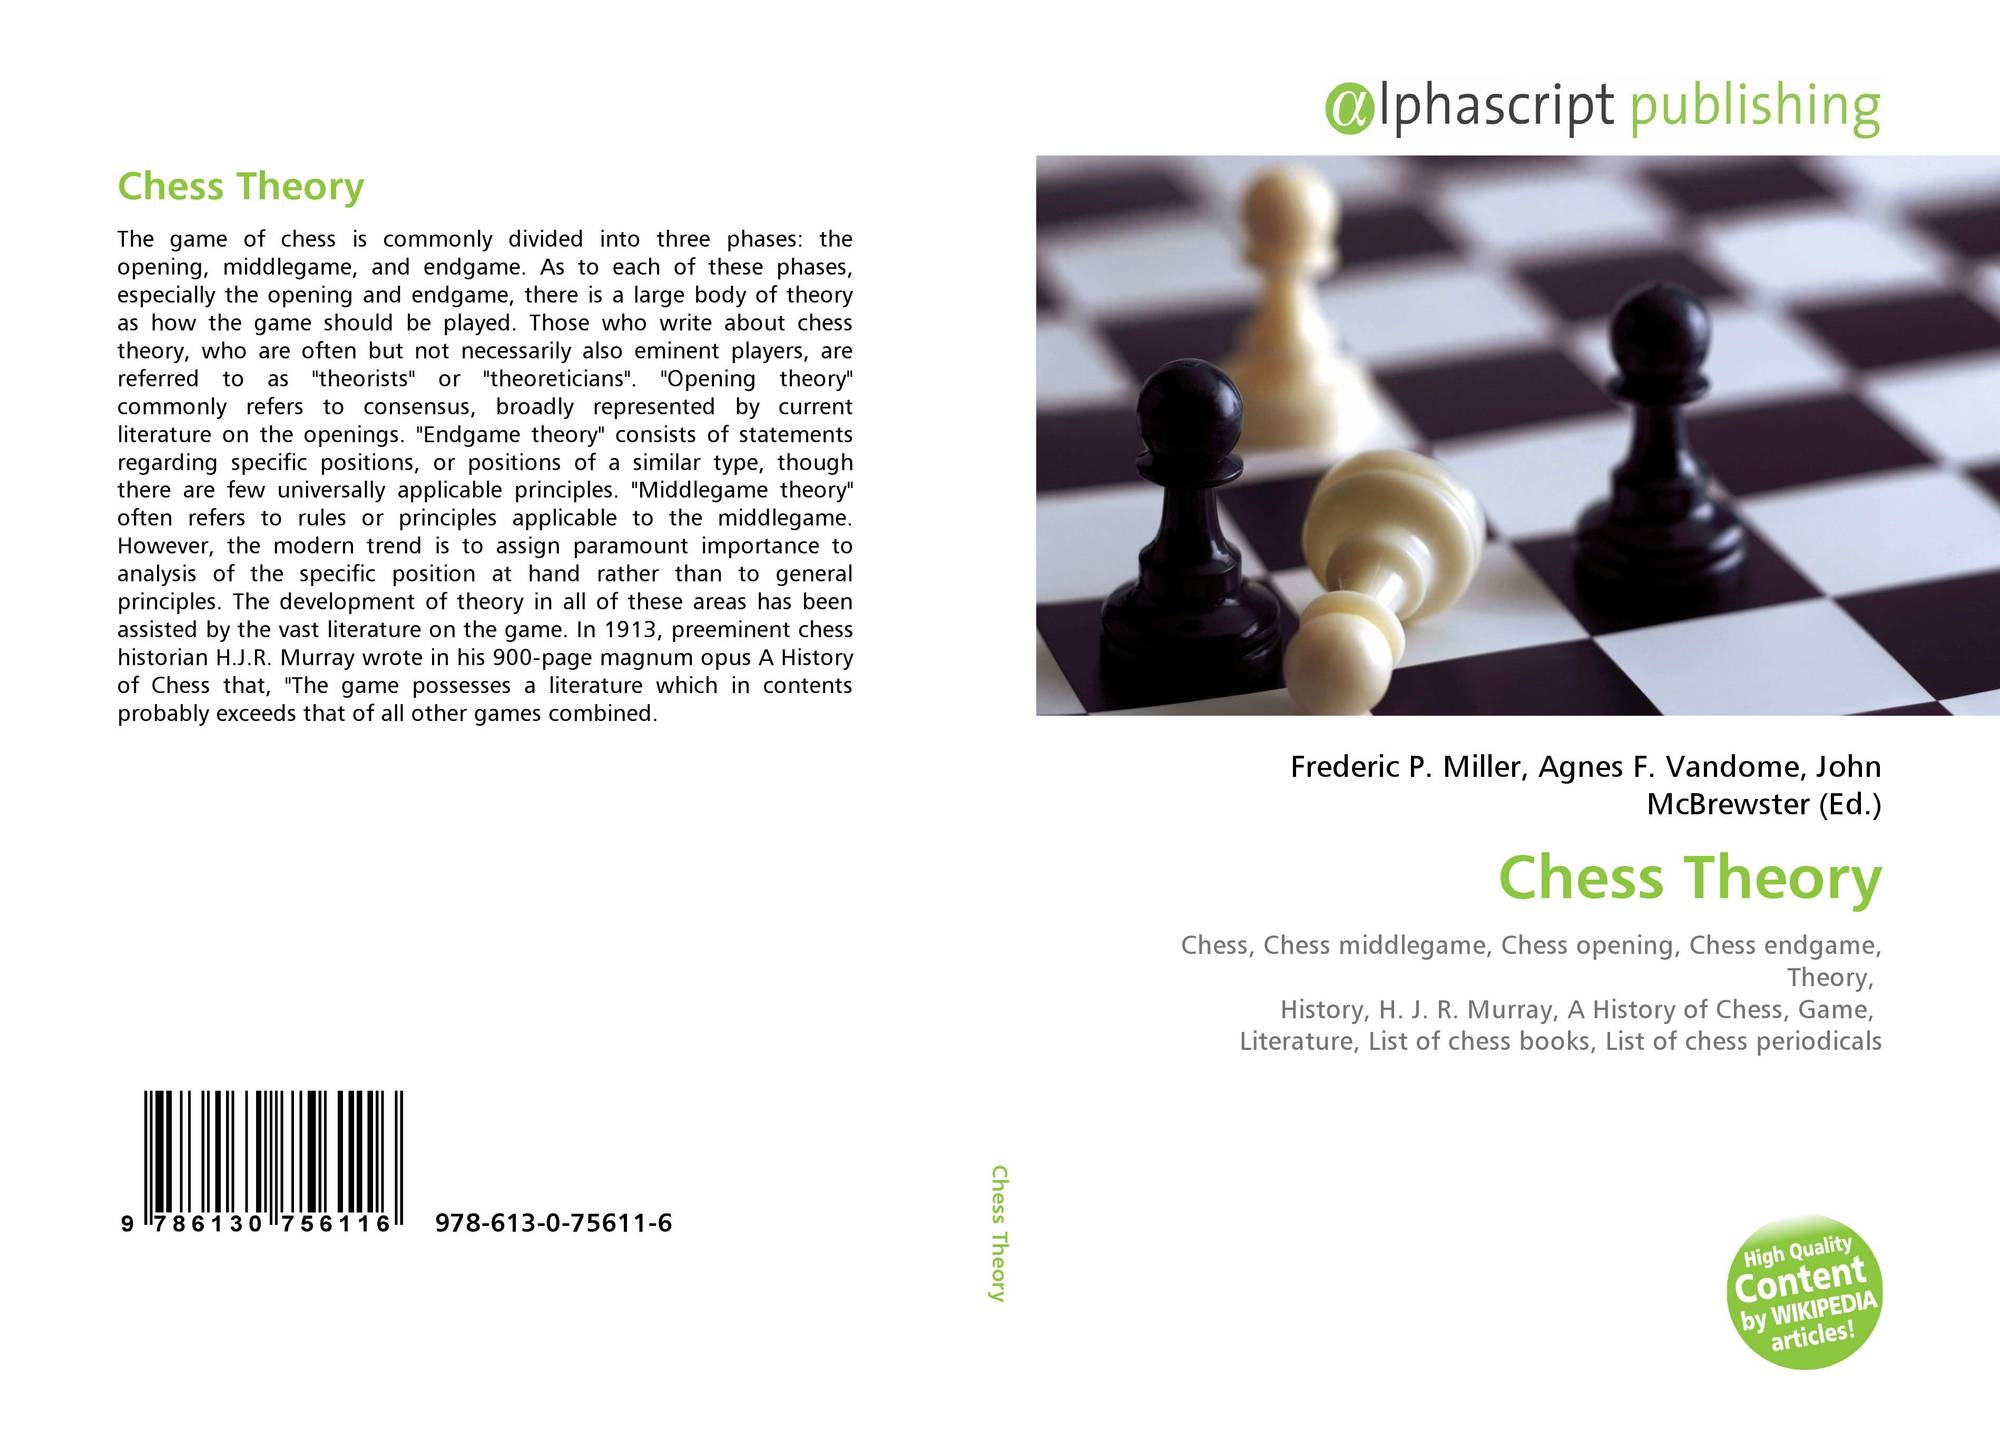 list of chess books